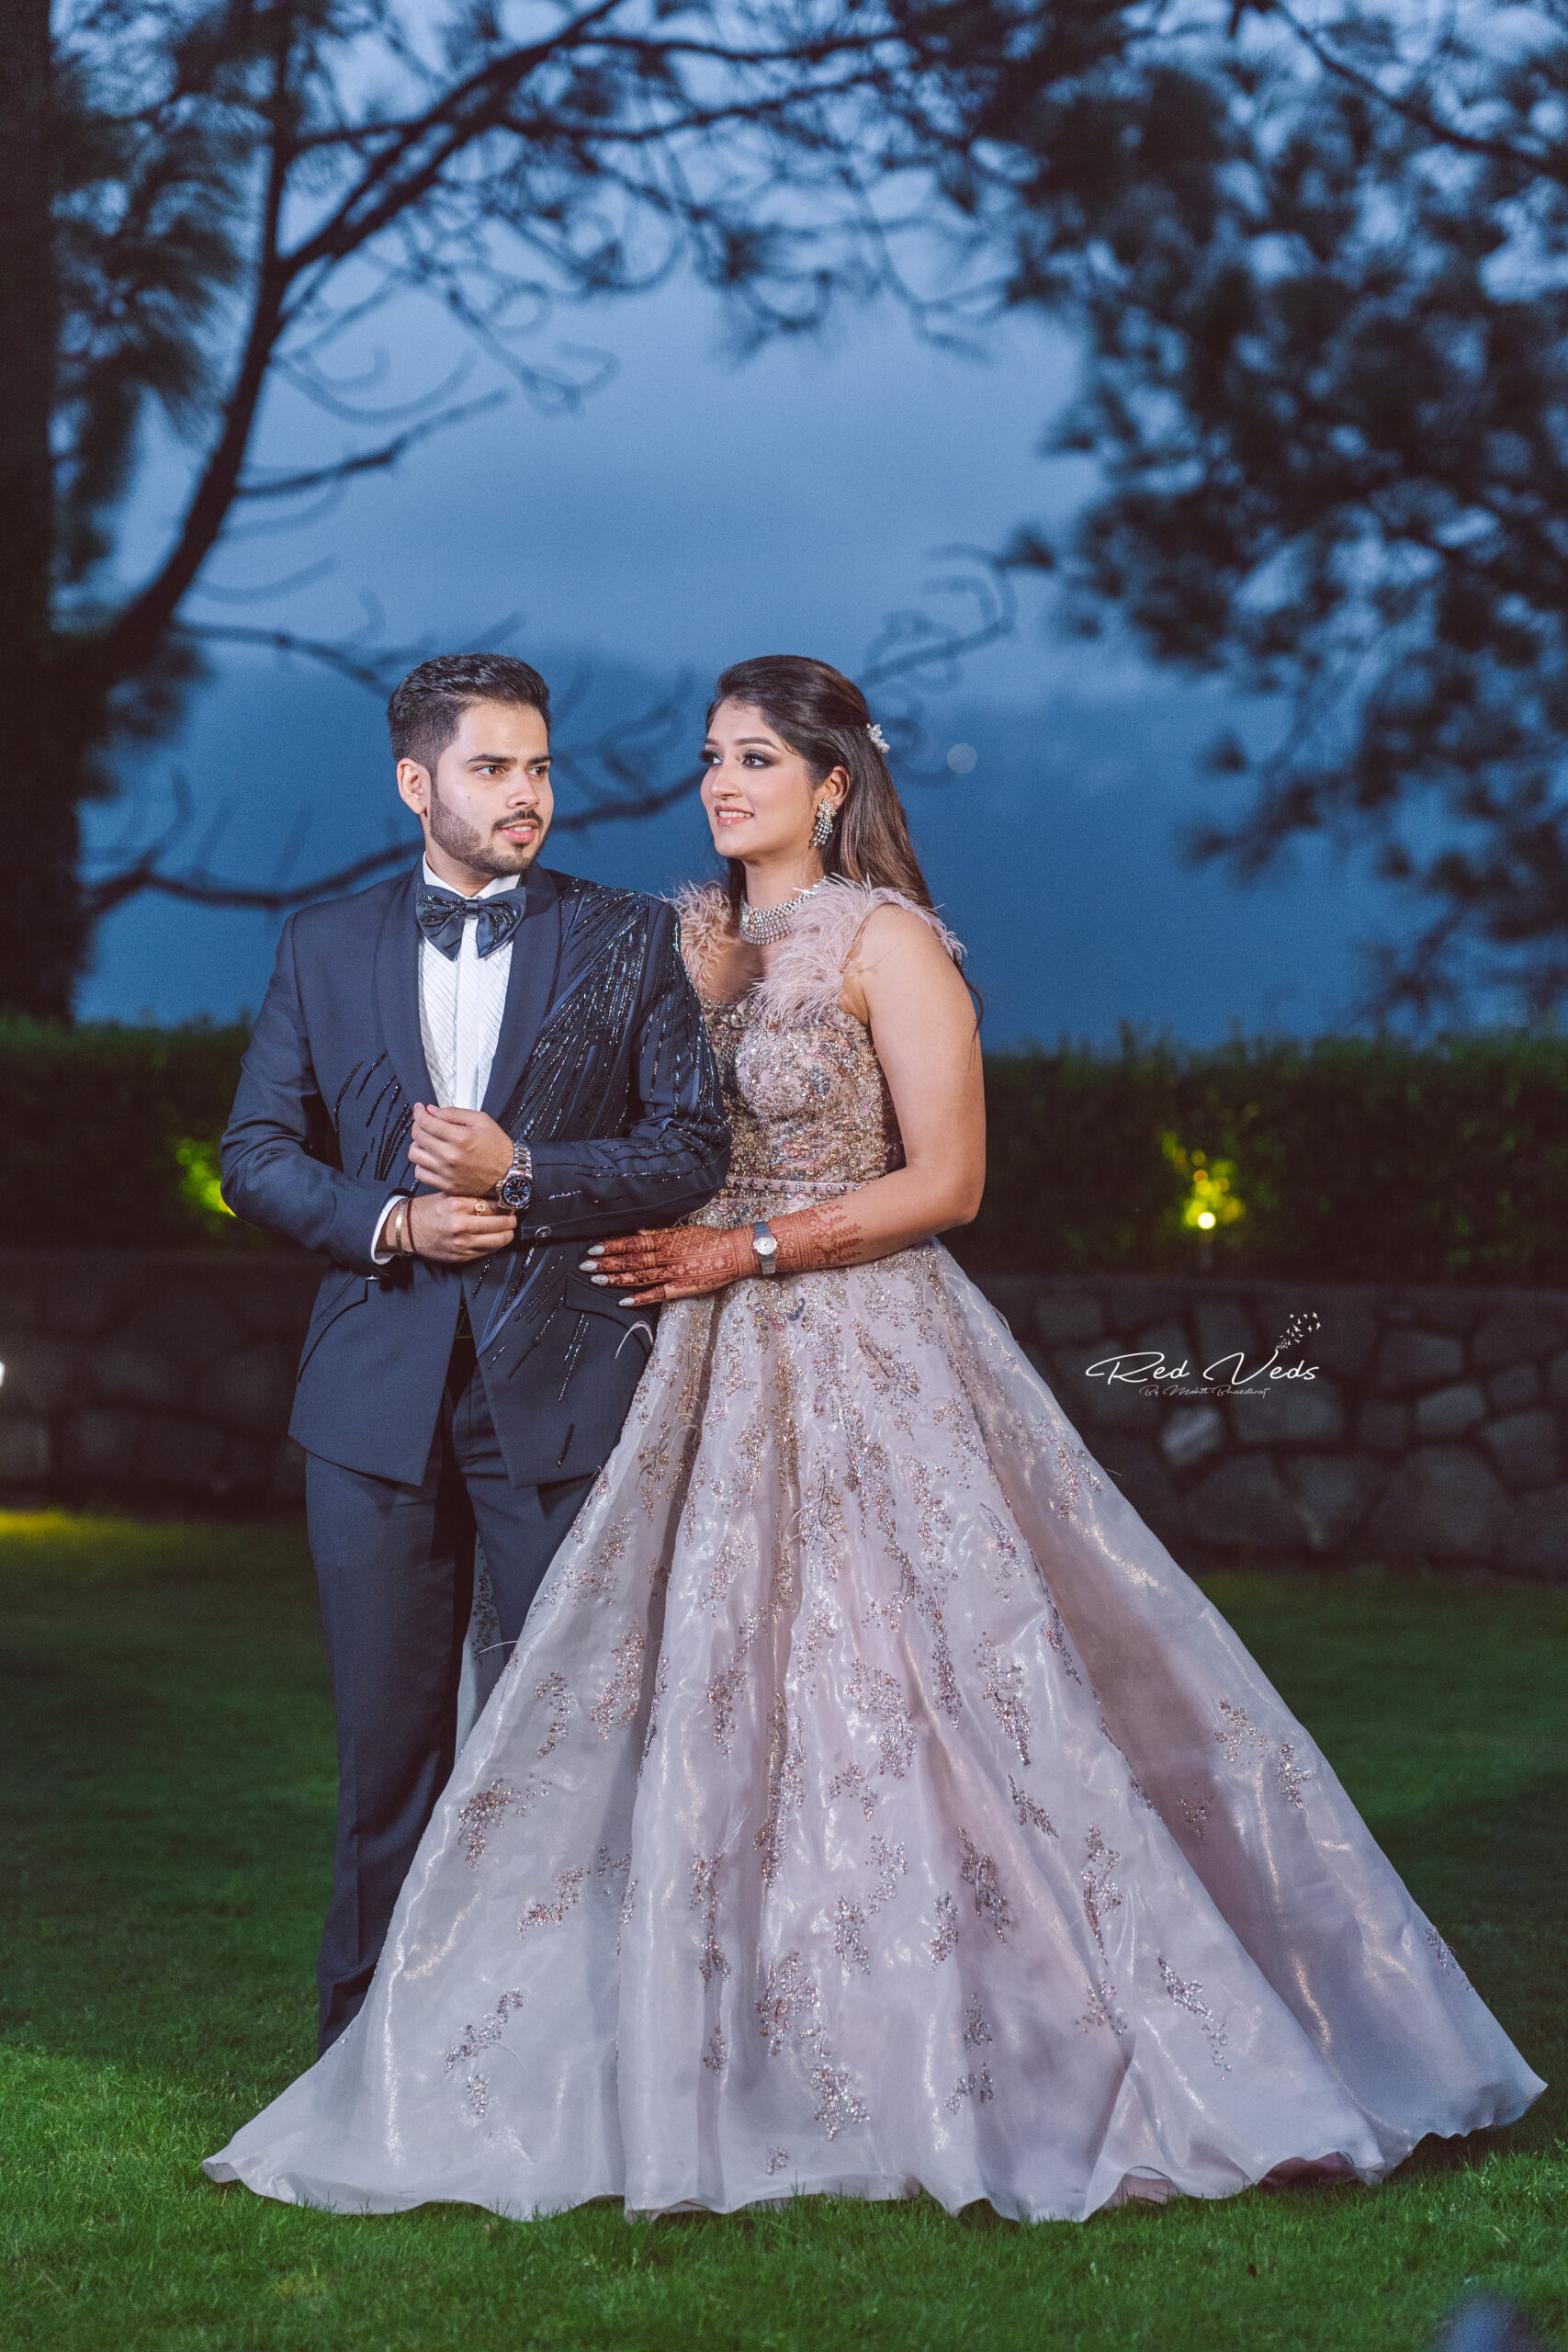 10 Best Pre Wedding Photoshoot Poses For Couples - Weddingreels